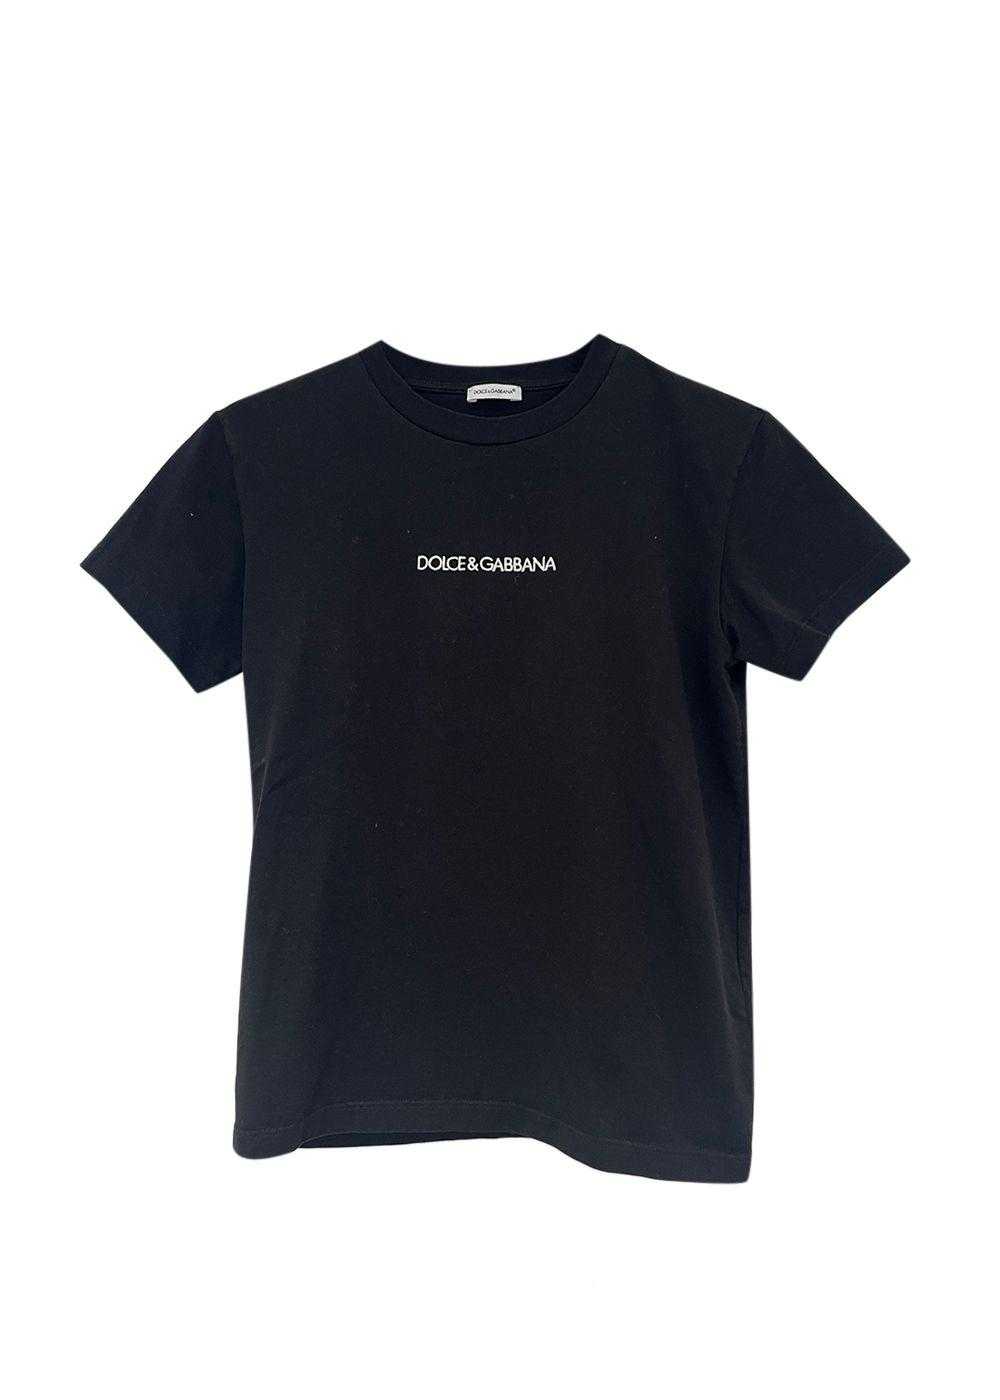 Product Details Dolce & Gabbana Kids Black T-Shirt - image 1